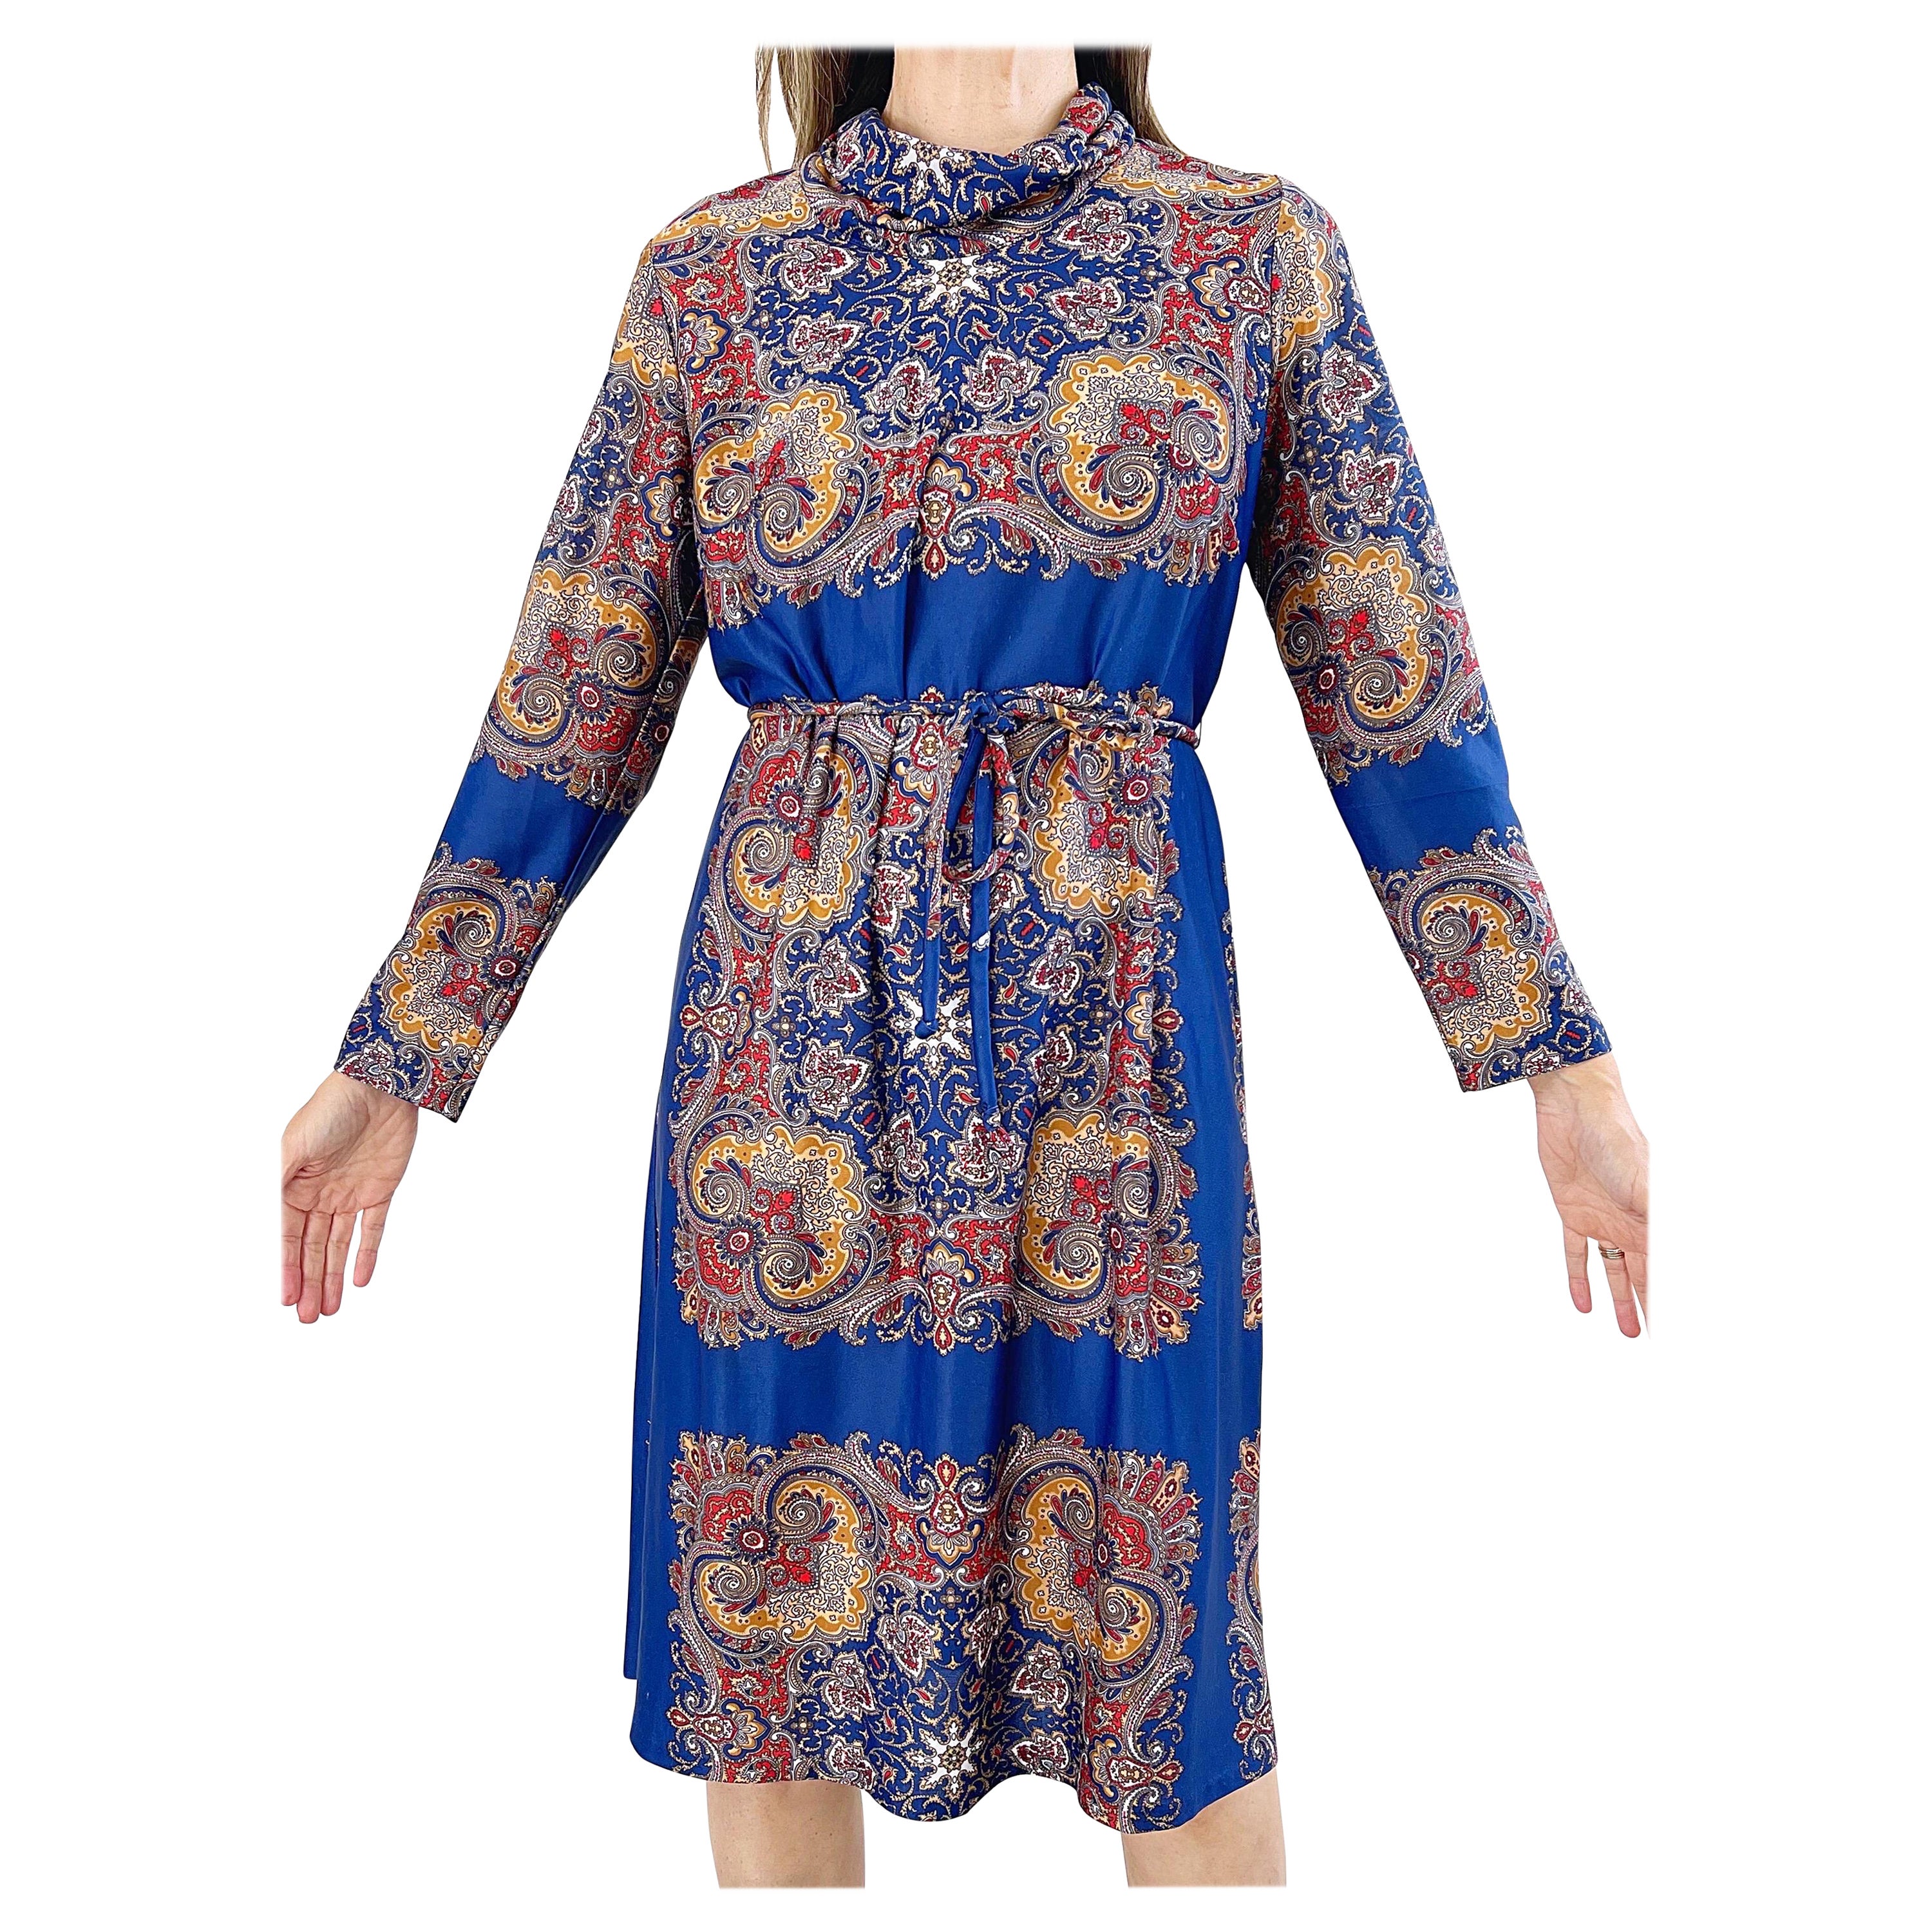 1970s Boho Chic Paisley Print Long Sleeve Mock Neck Vintage 70s Knit Dress For Sale